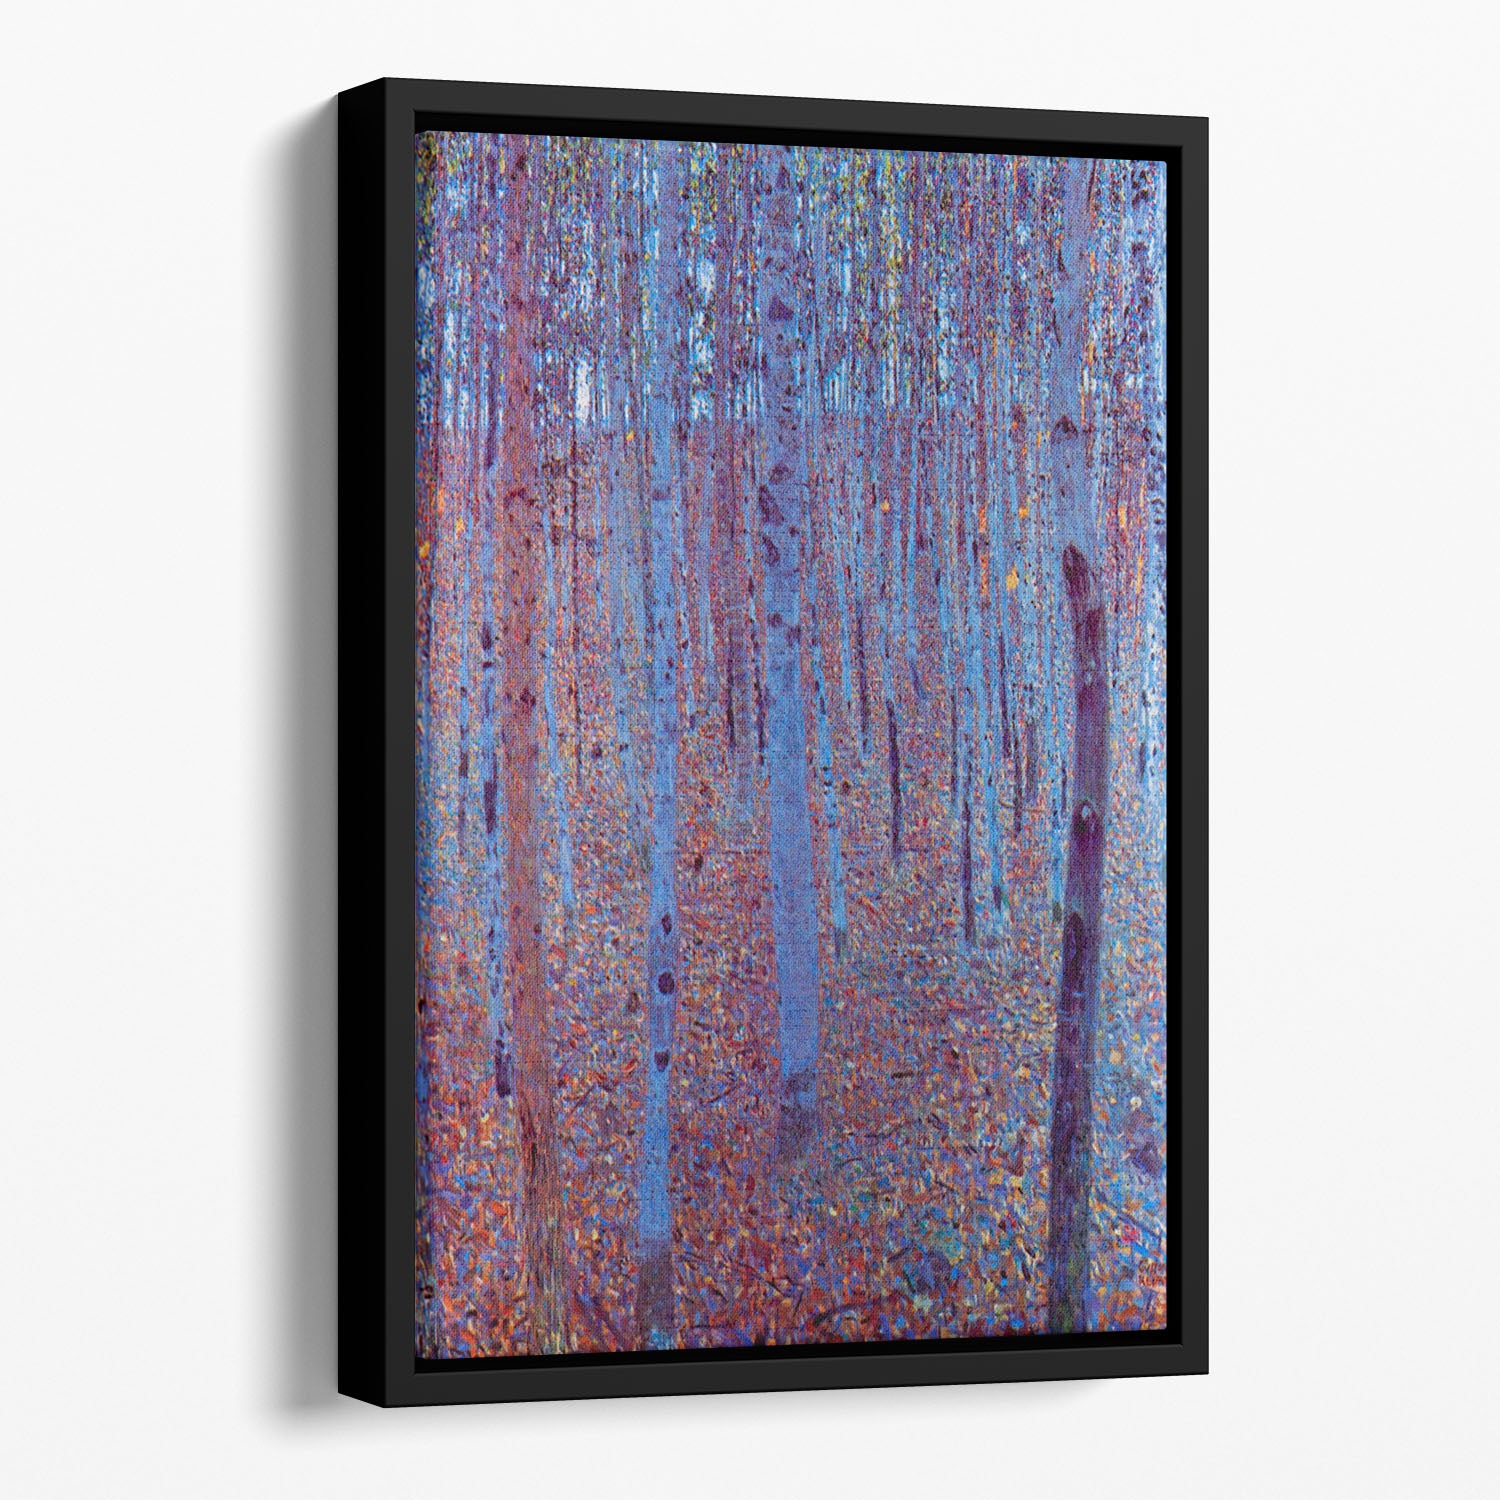 Beech Forest by Klimt Floating Framed Canvas